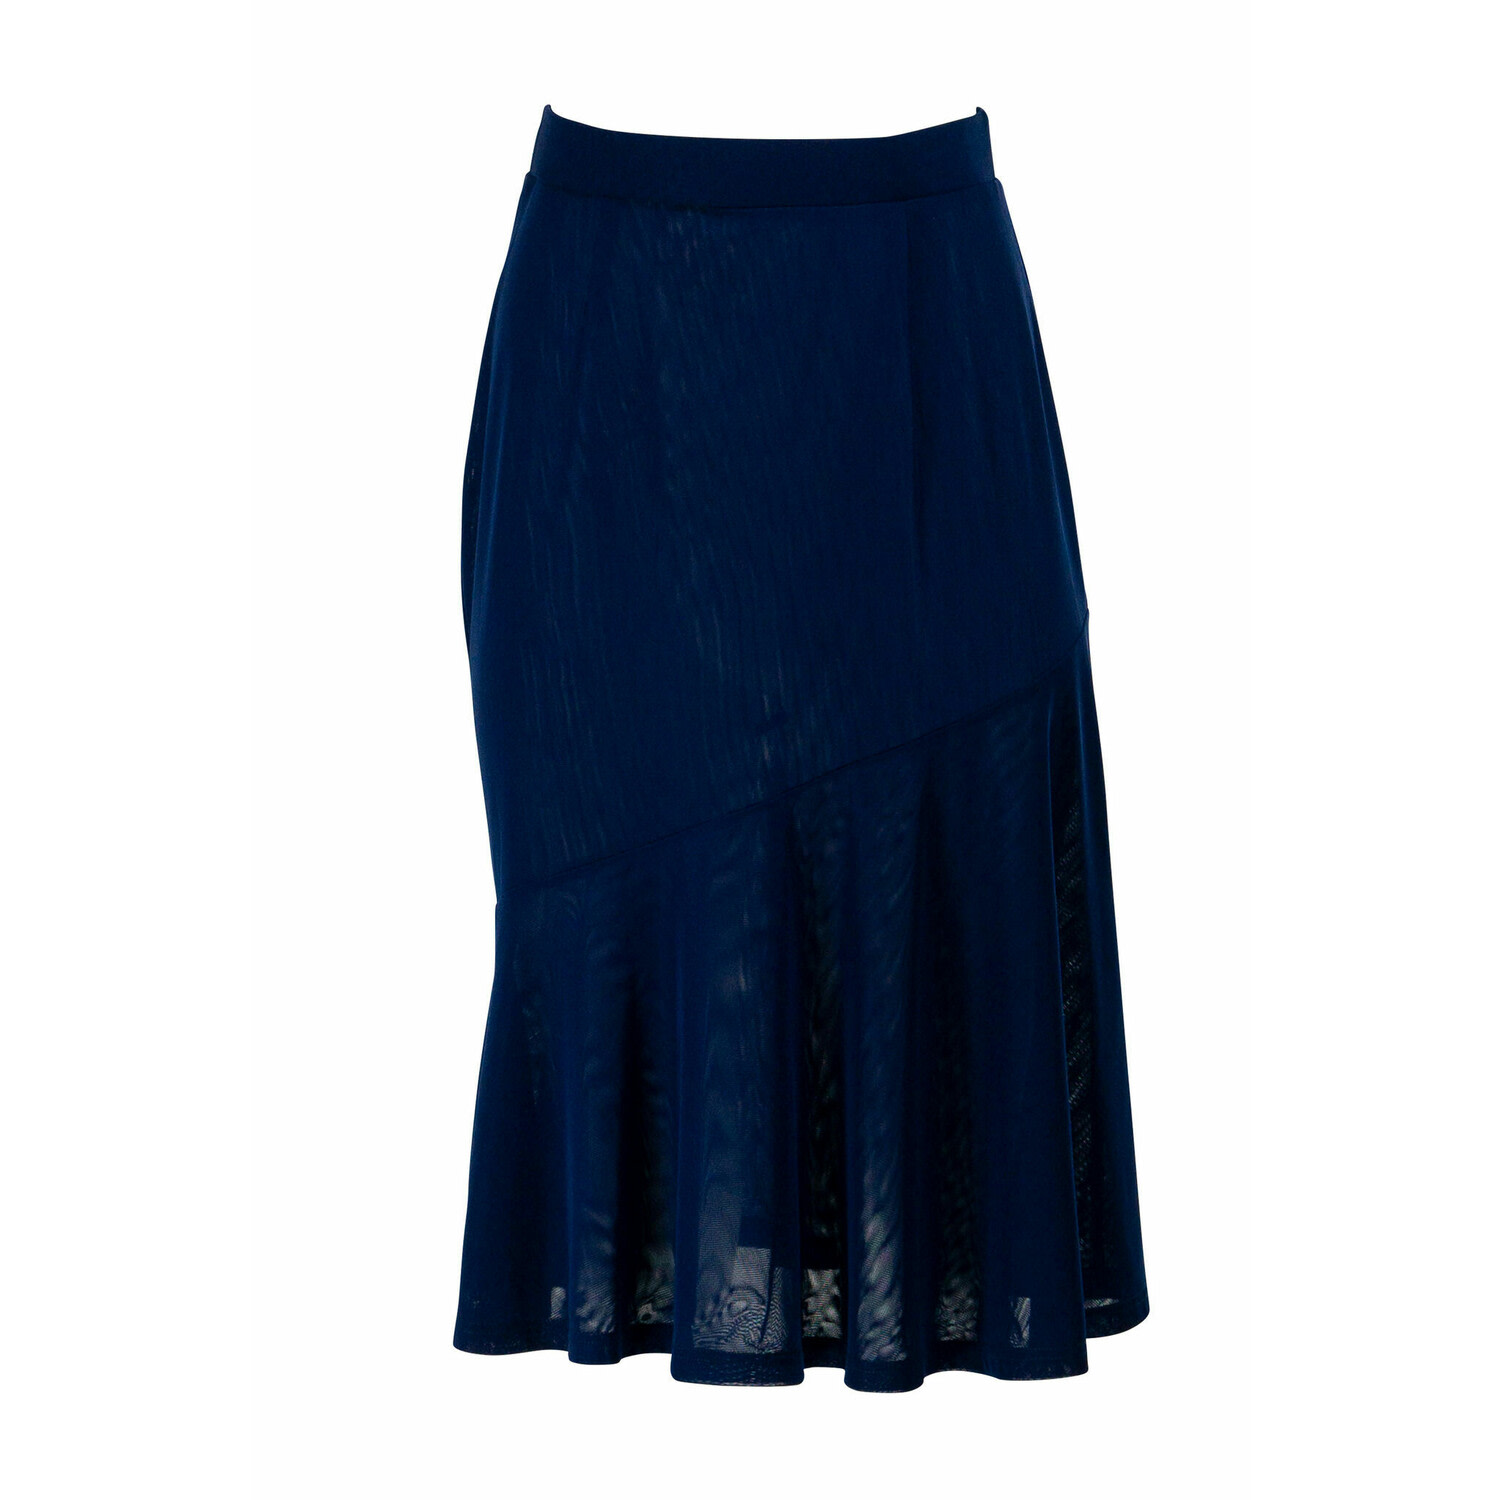 Kristinit Women's Blue Navy Chatteron Skirt